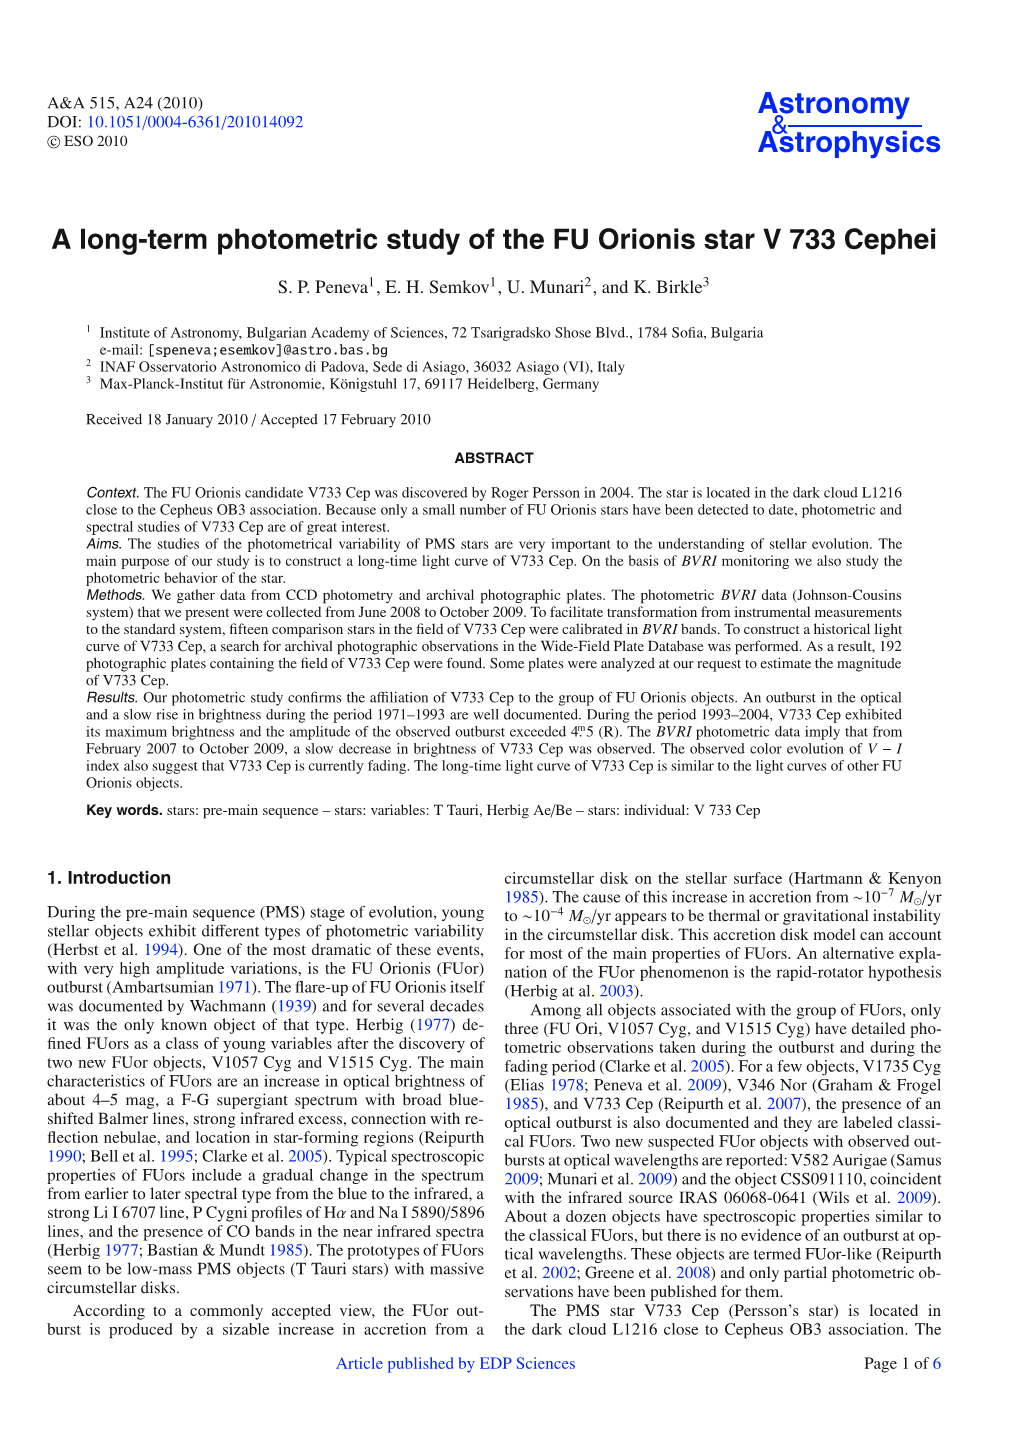 A Long-Term Photometric Study of the FU Orionis Star V 733 Cephei